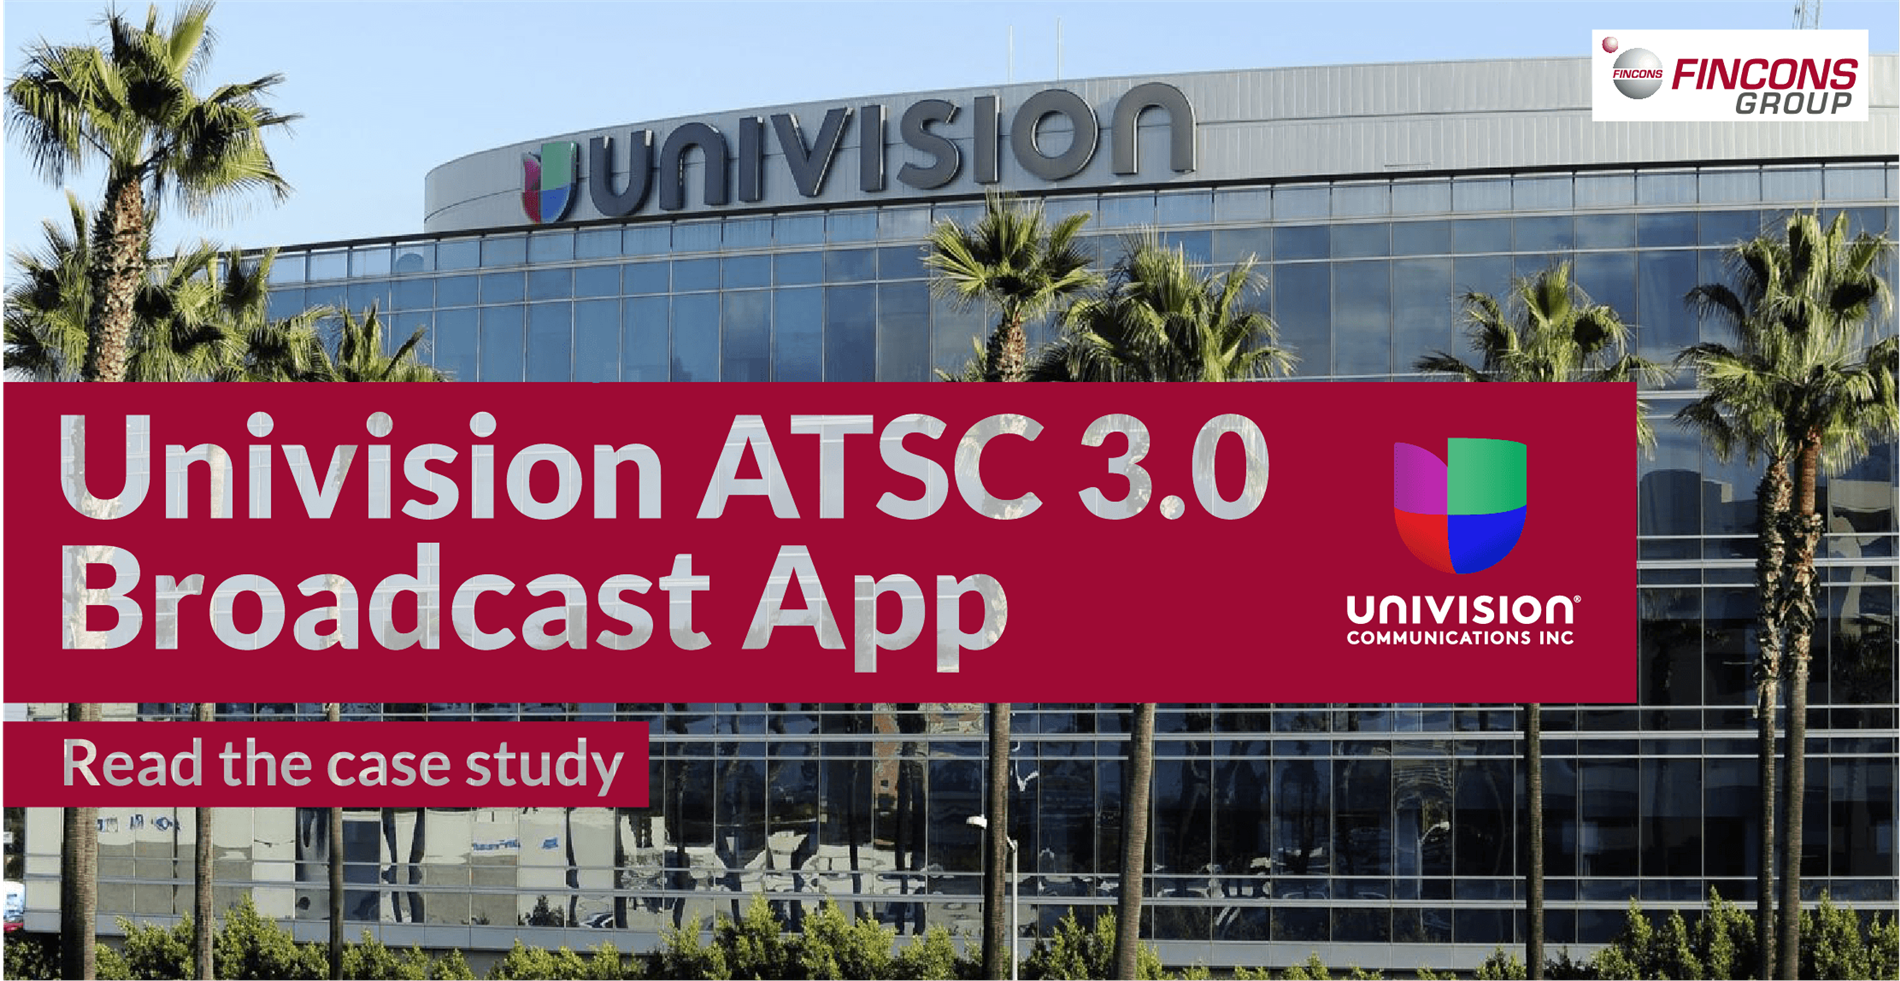 Univision ATSC 3.0 Broadcast App